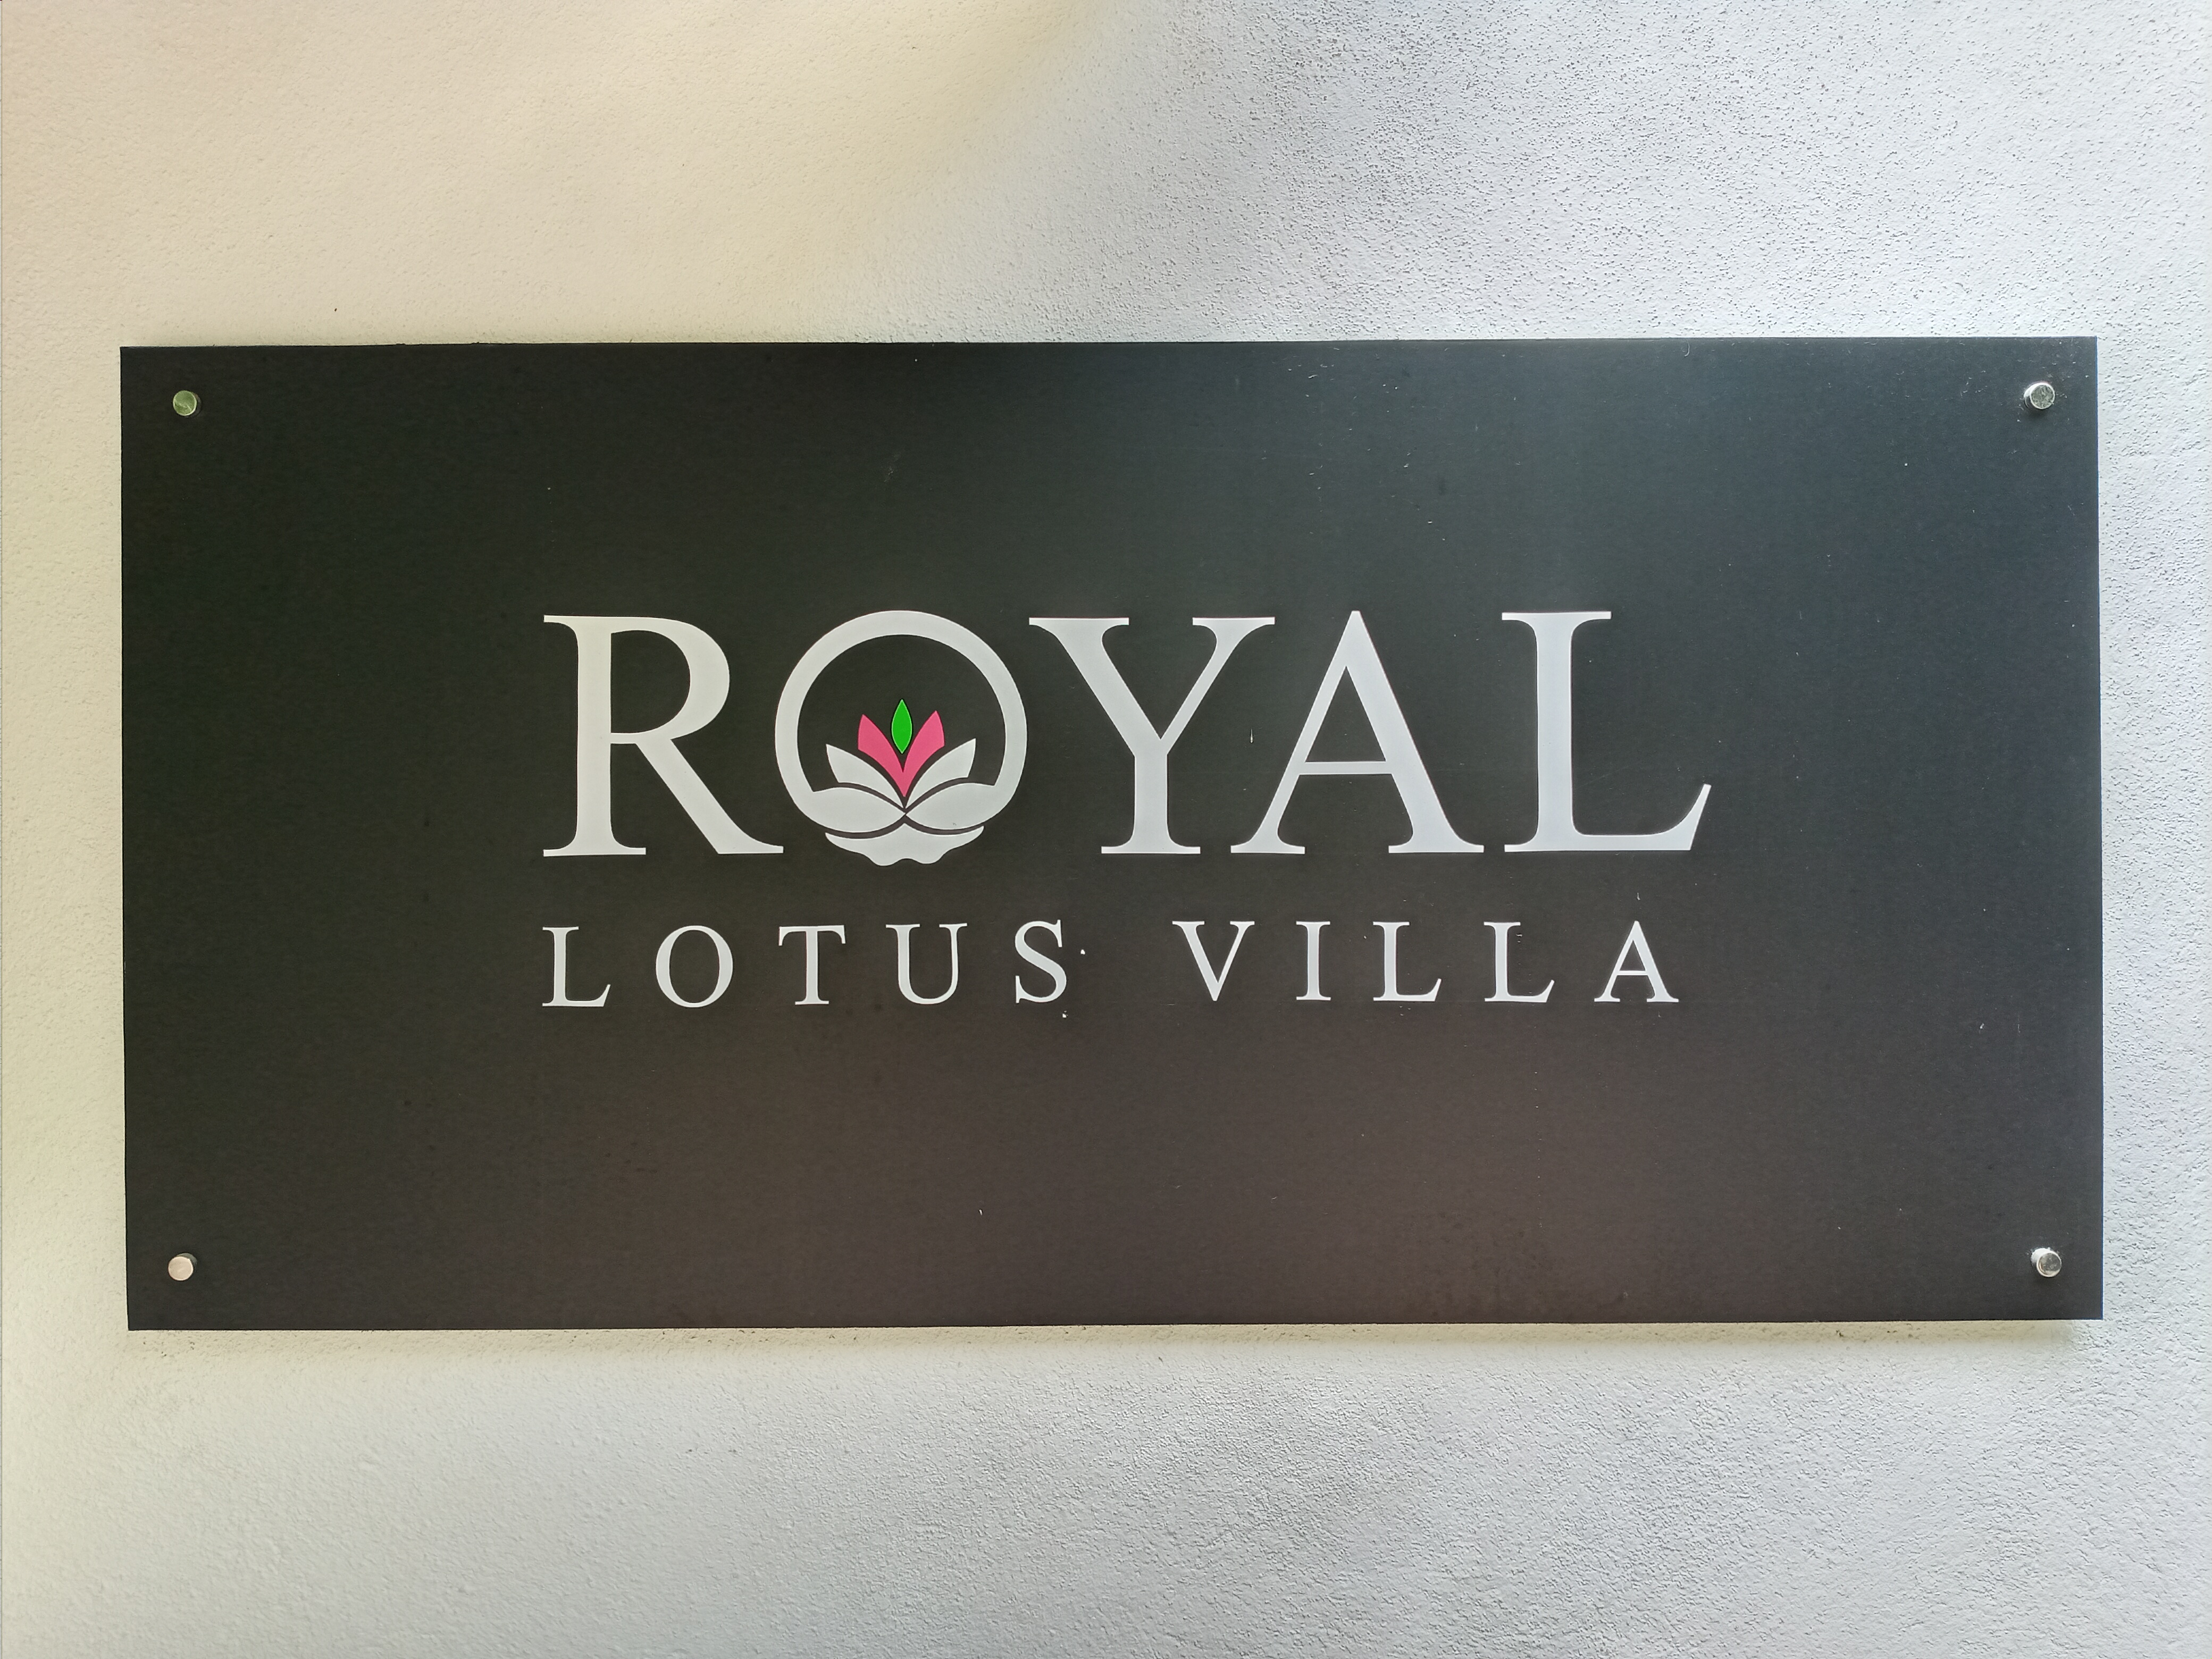 Royal Lotus Villa